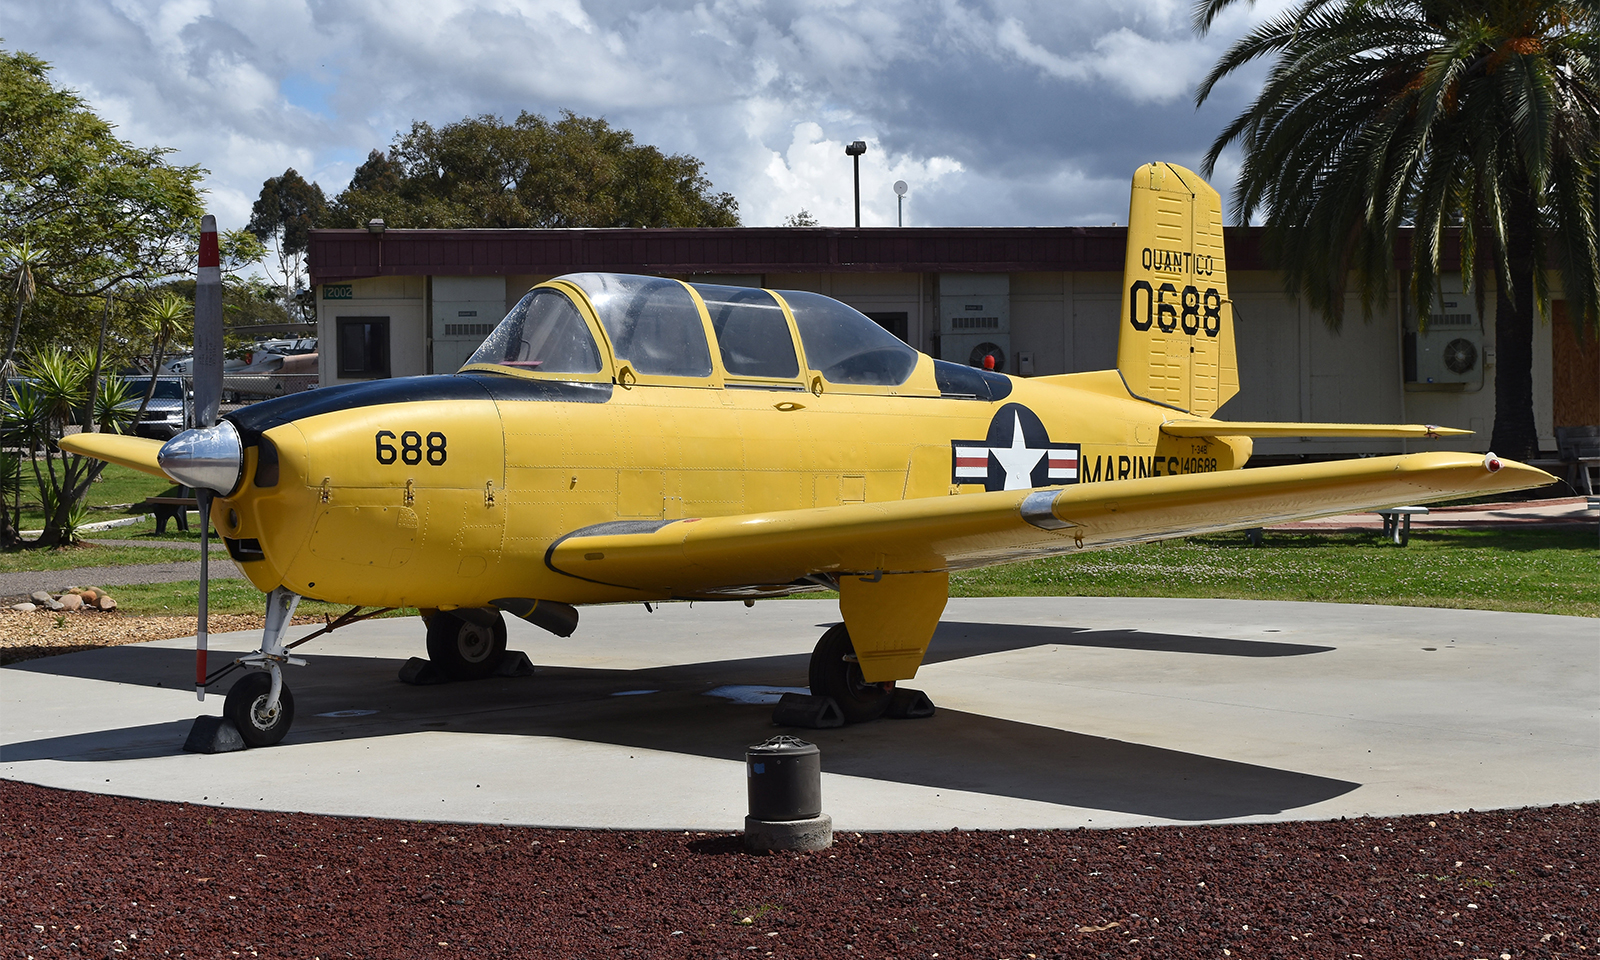 Aviation museum landing in Irvine